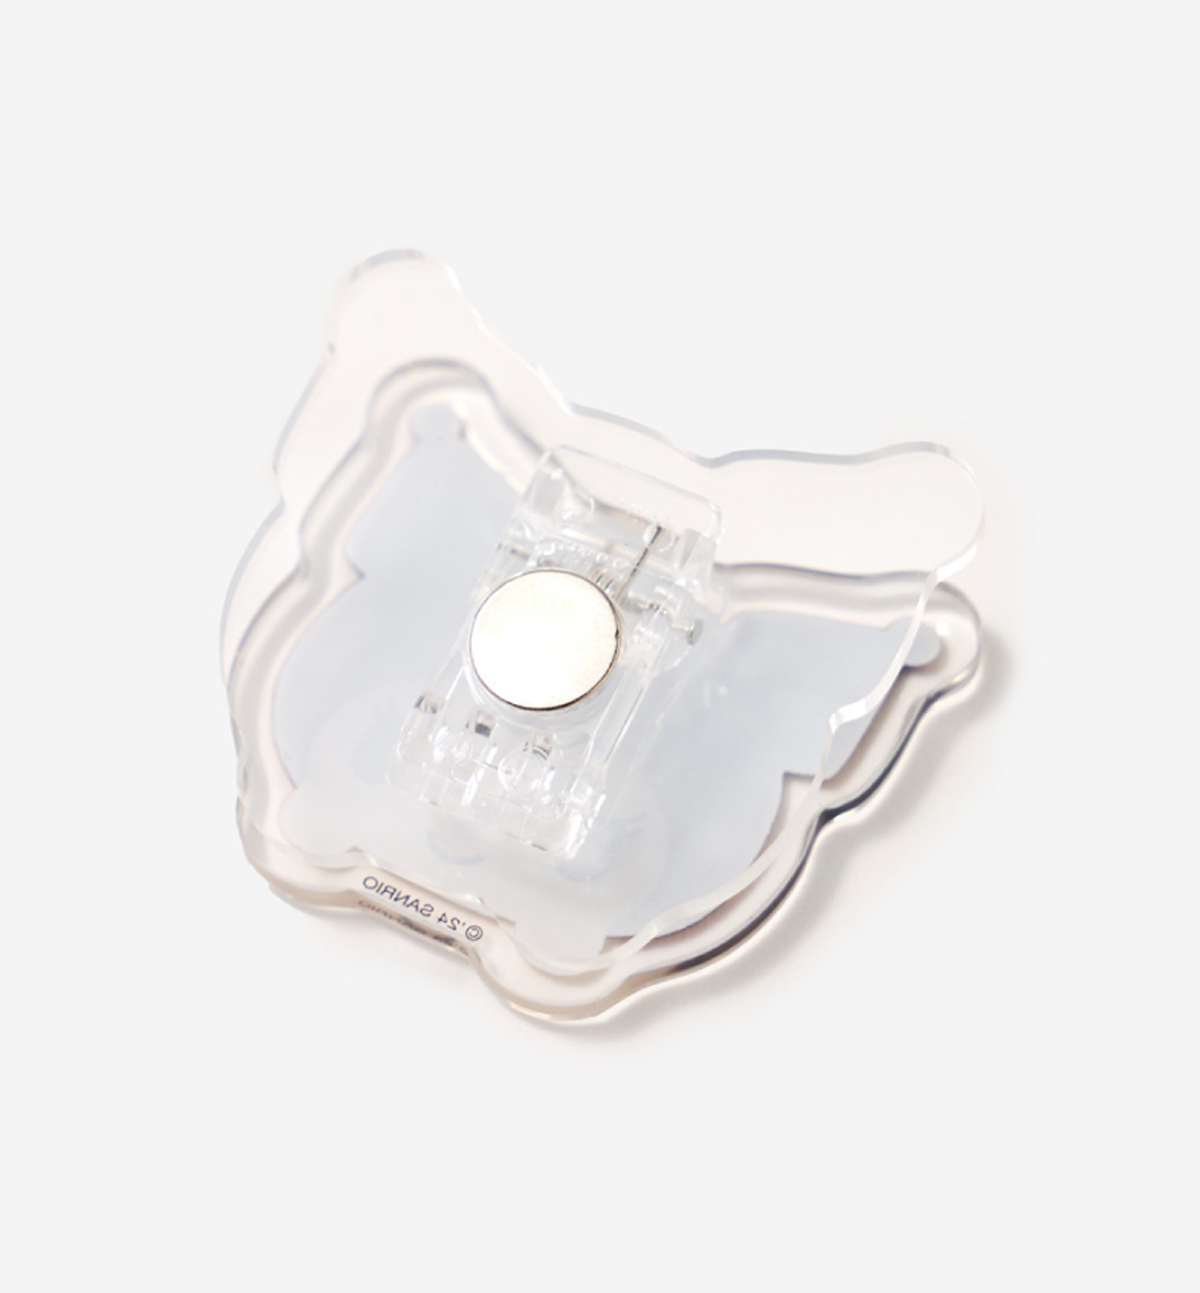 Sanrio Pompom Acrylic Magnet Clip [5 Designs]